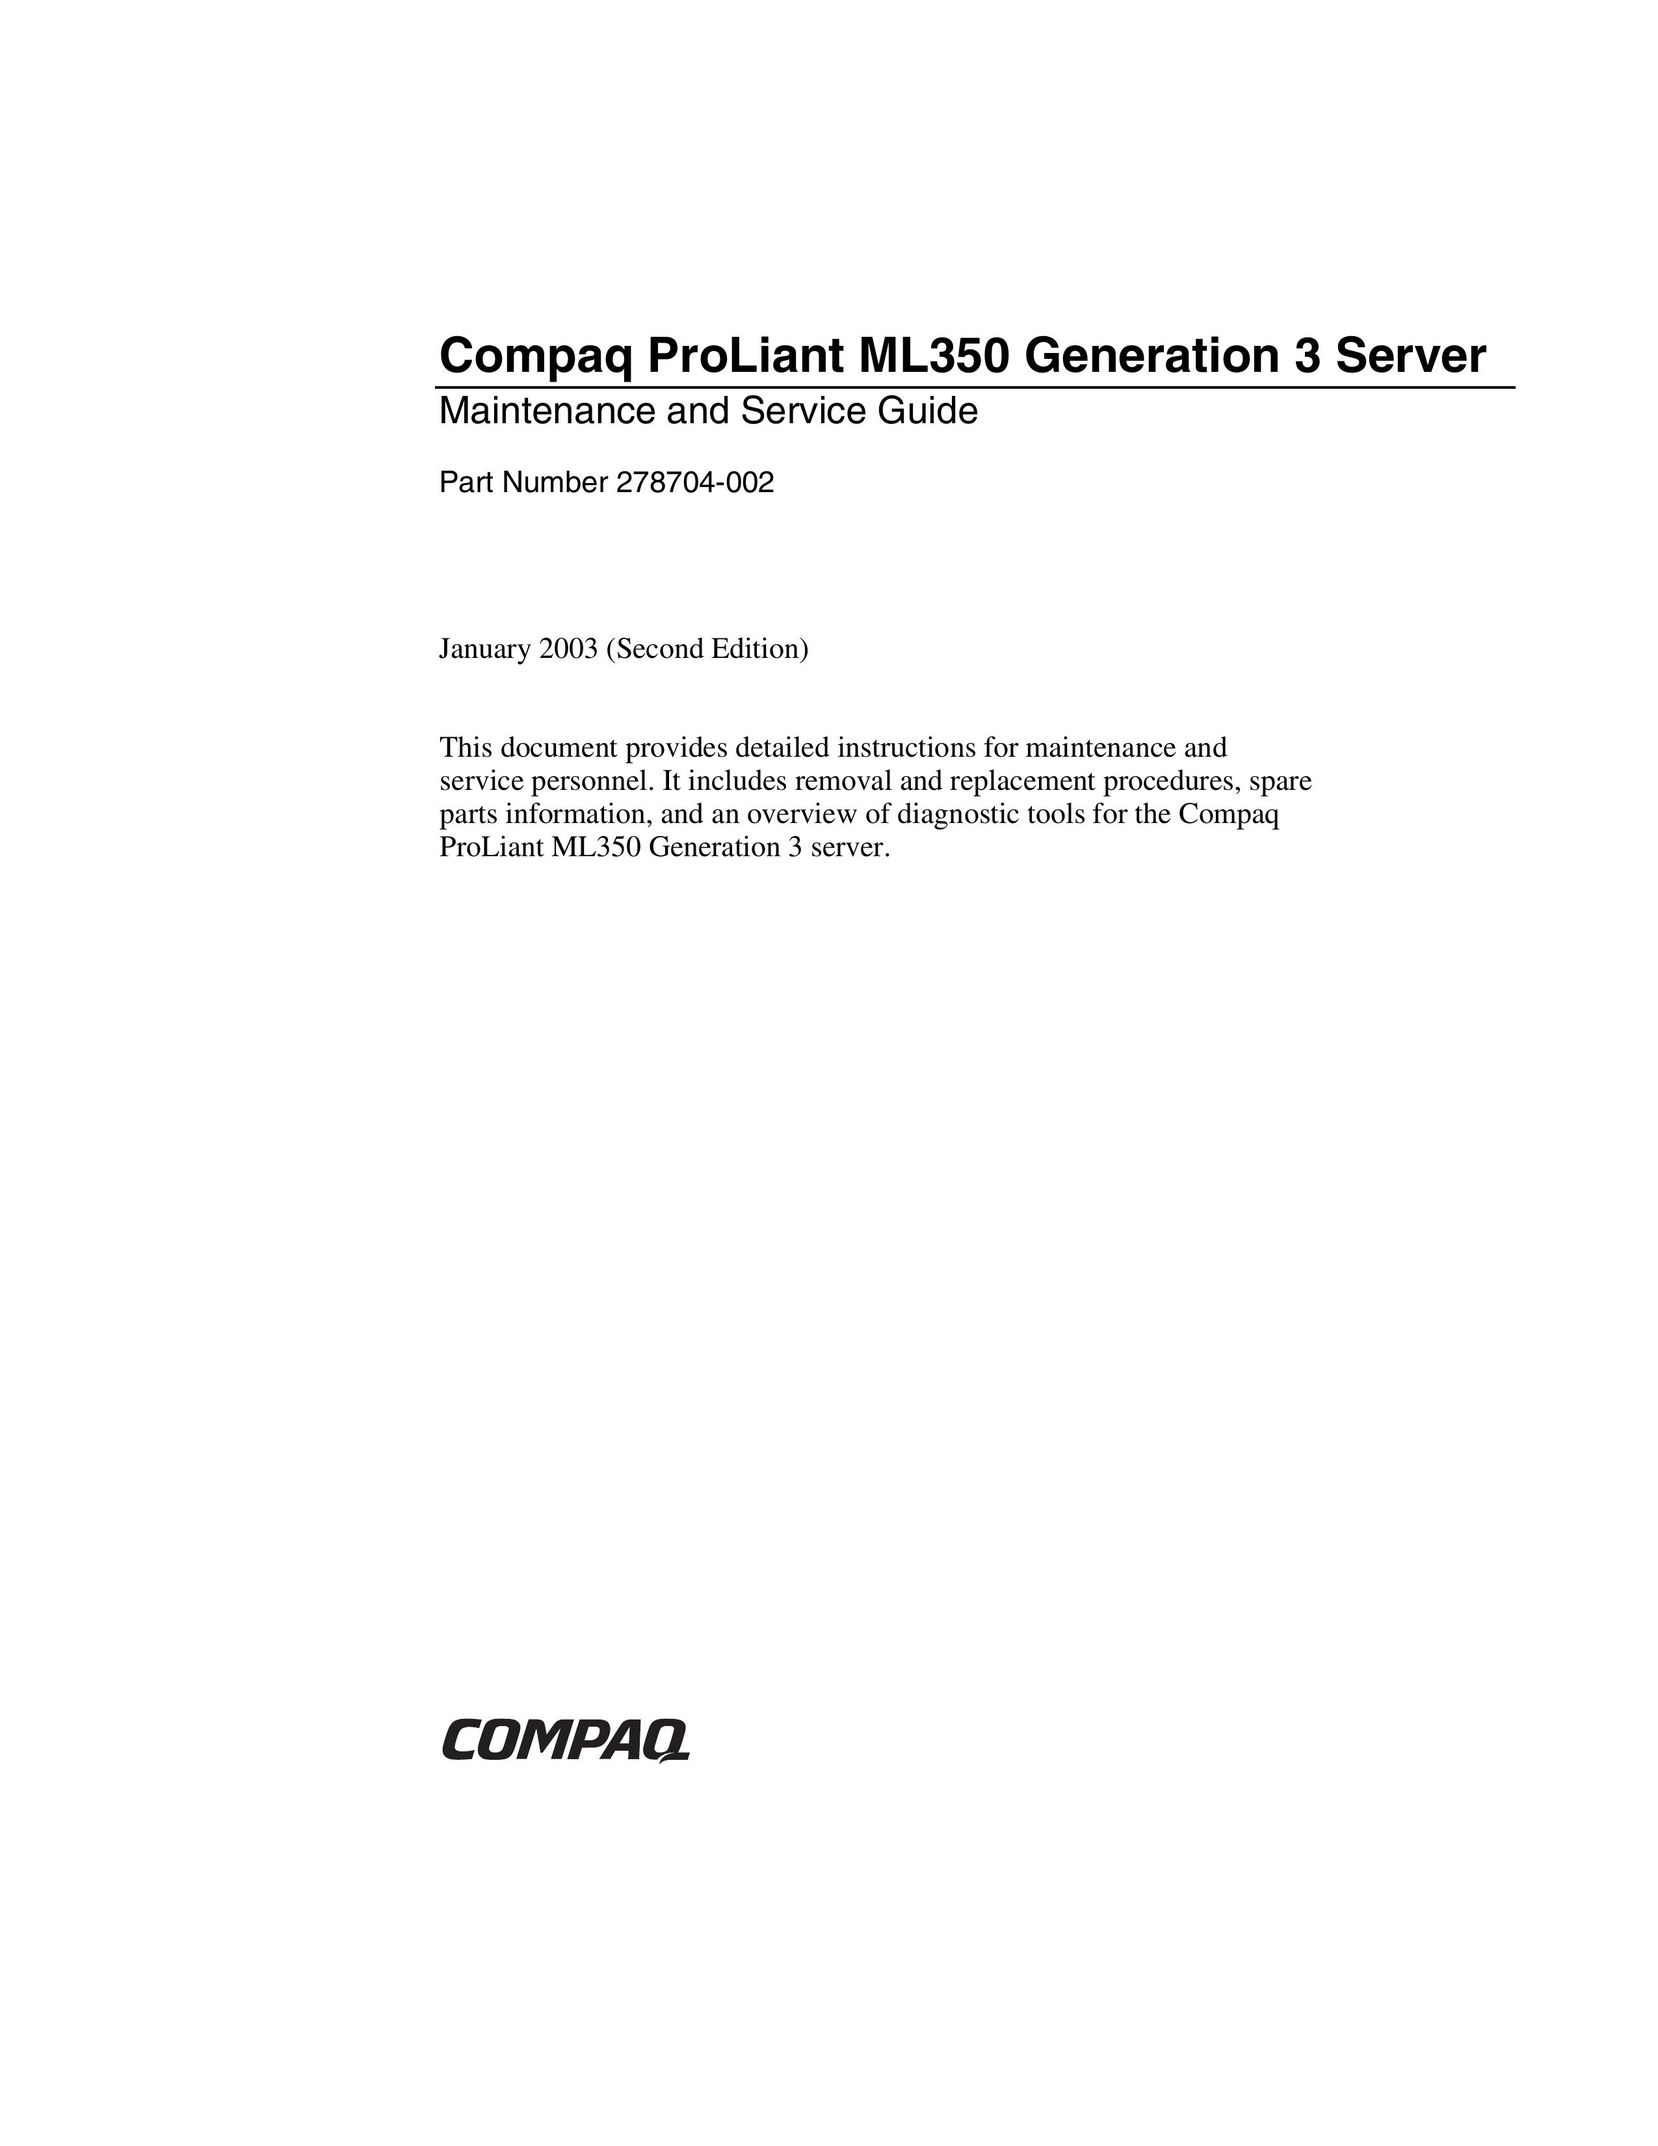 Compaq ML350 Server User Manual